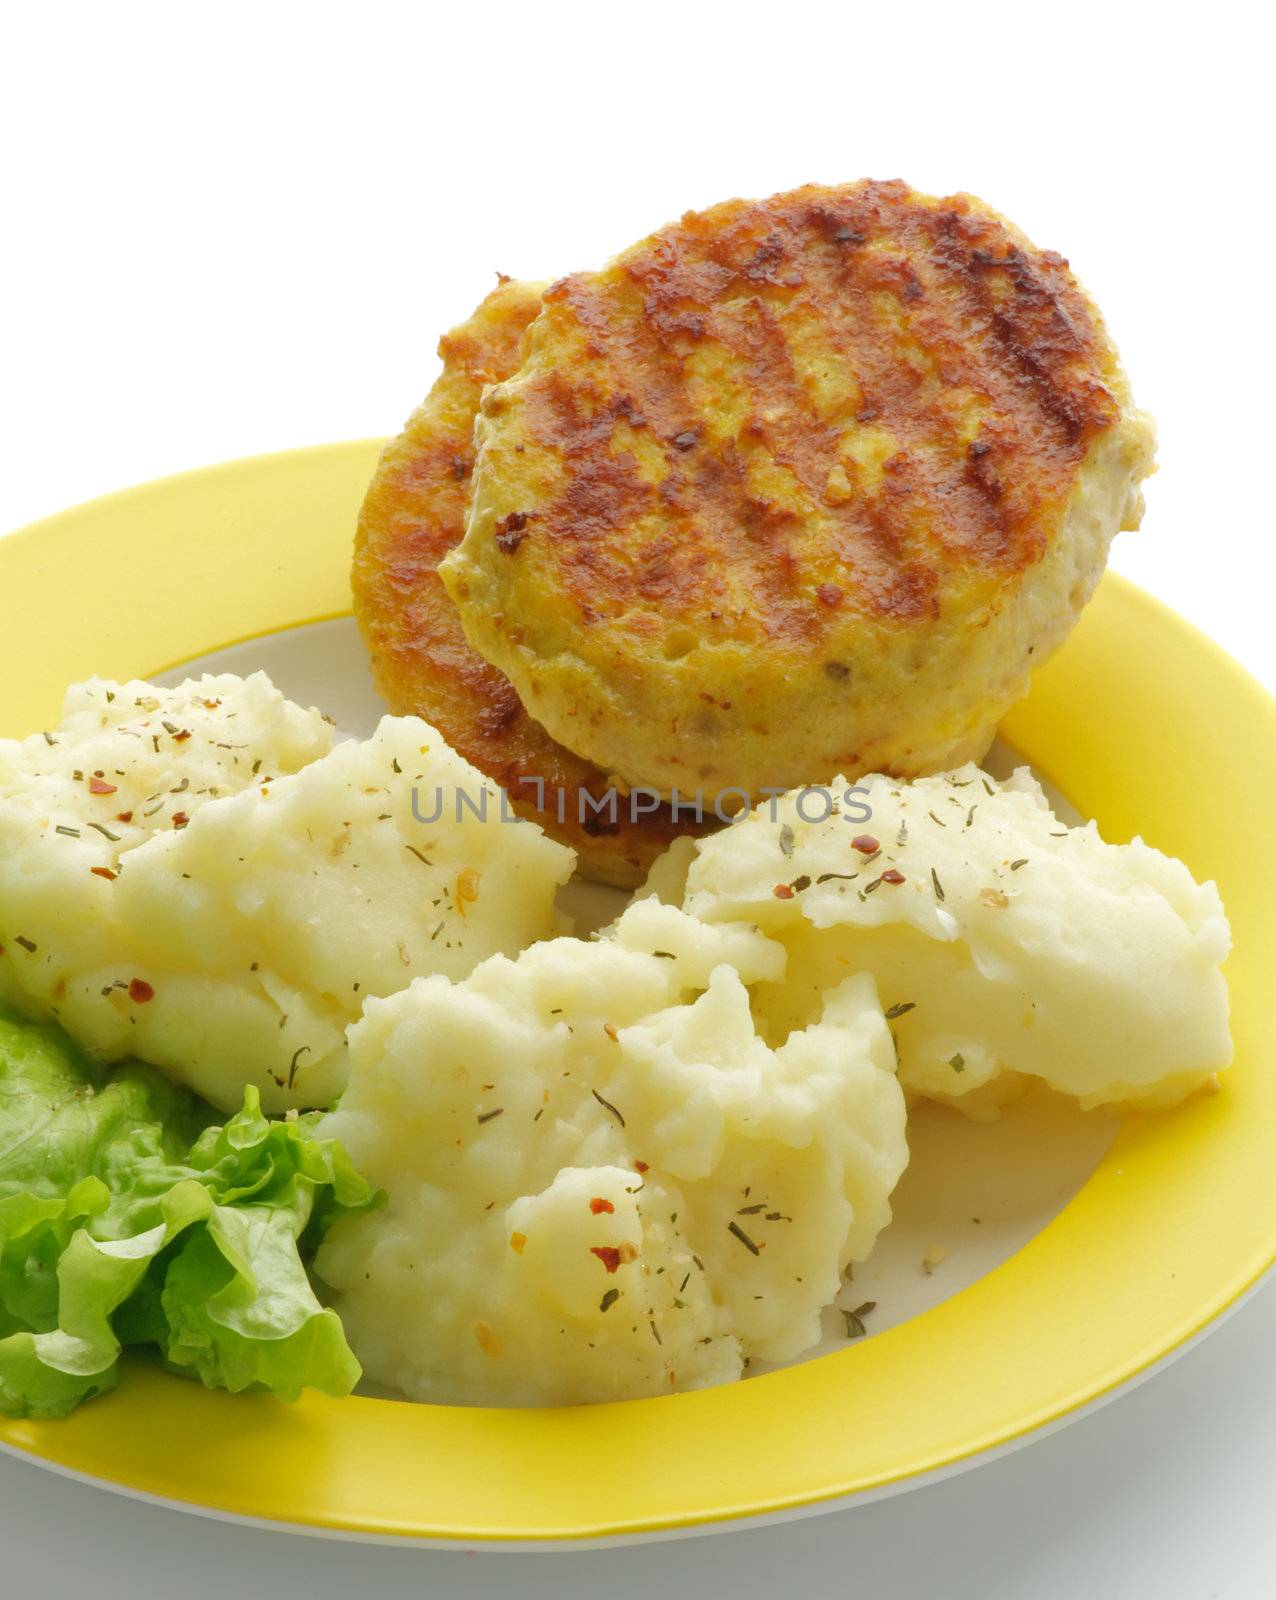 Mashed Potato and Cutlets by zhekos